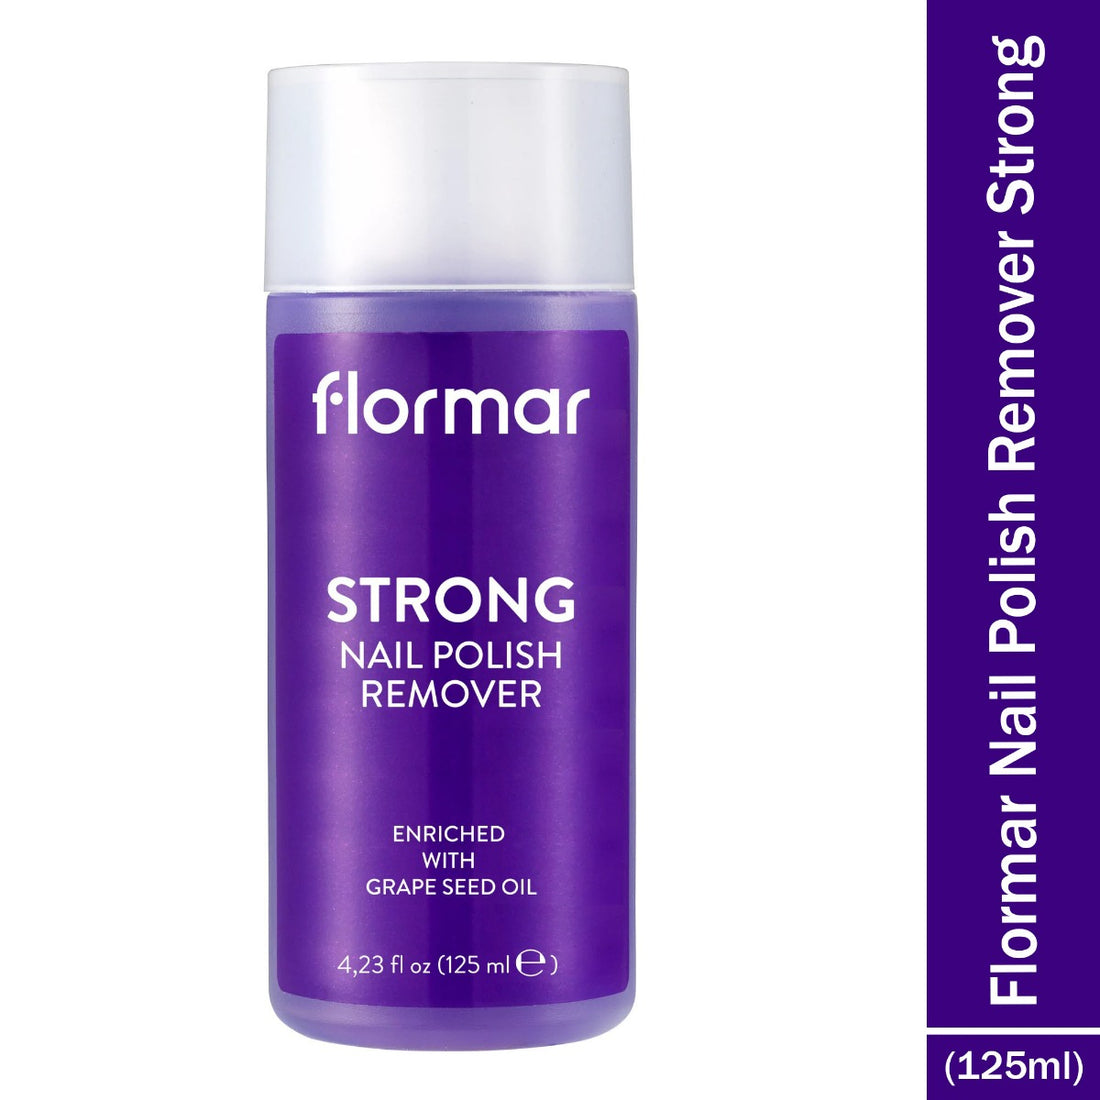 Flormar Nail Polish Remover Strong (125ml)